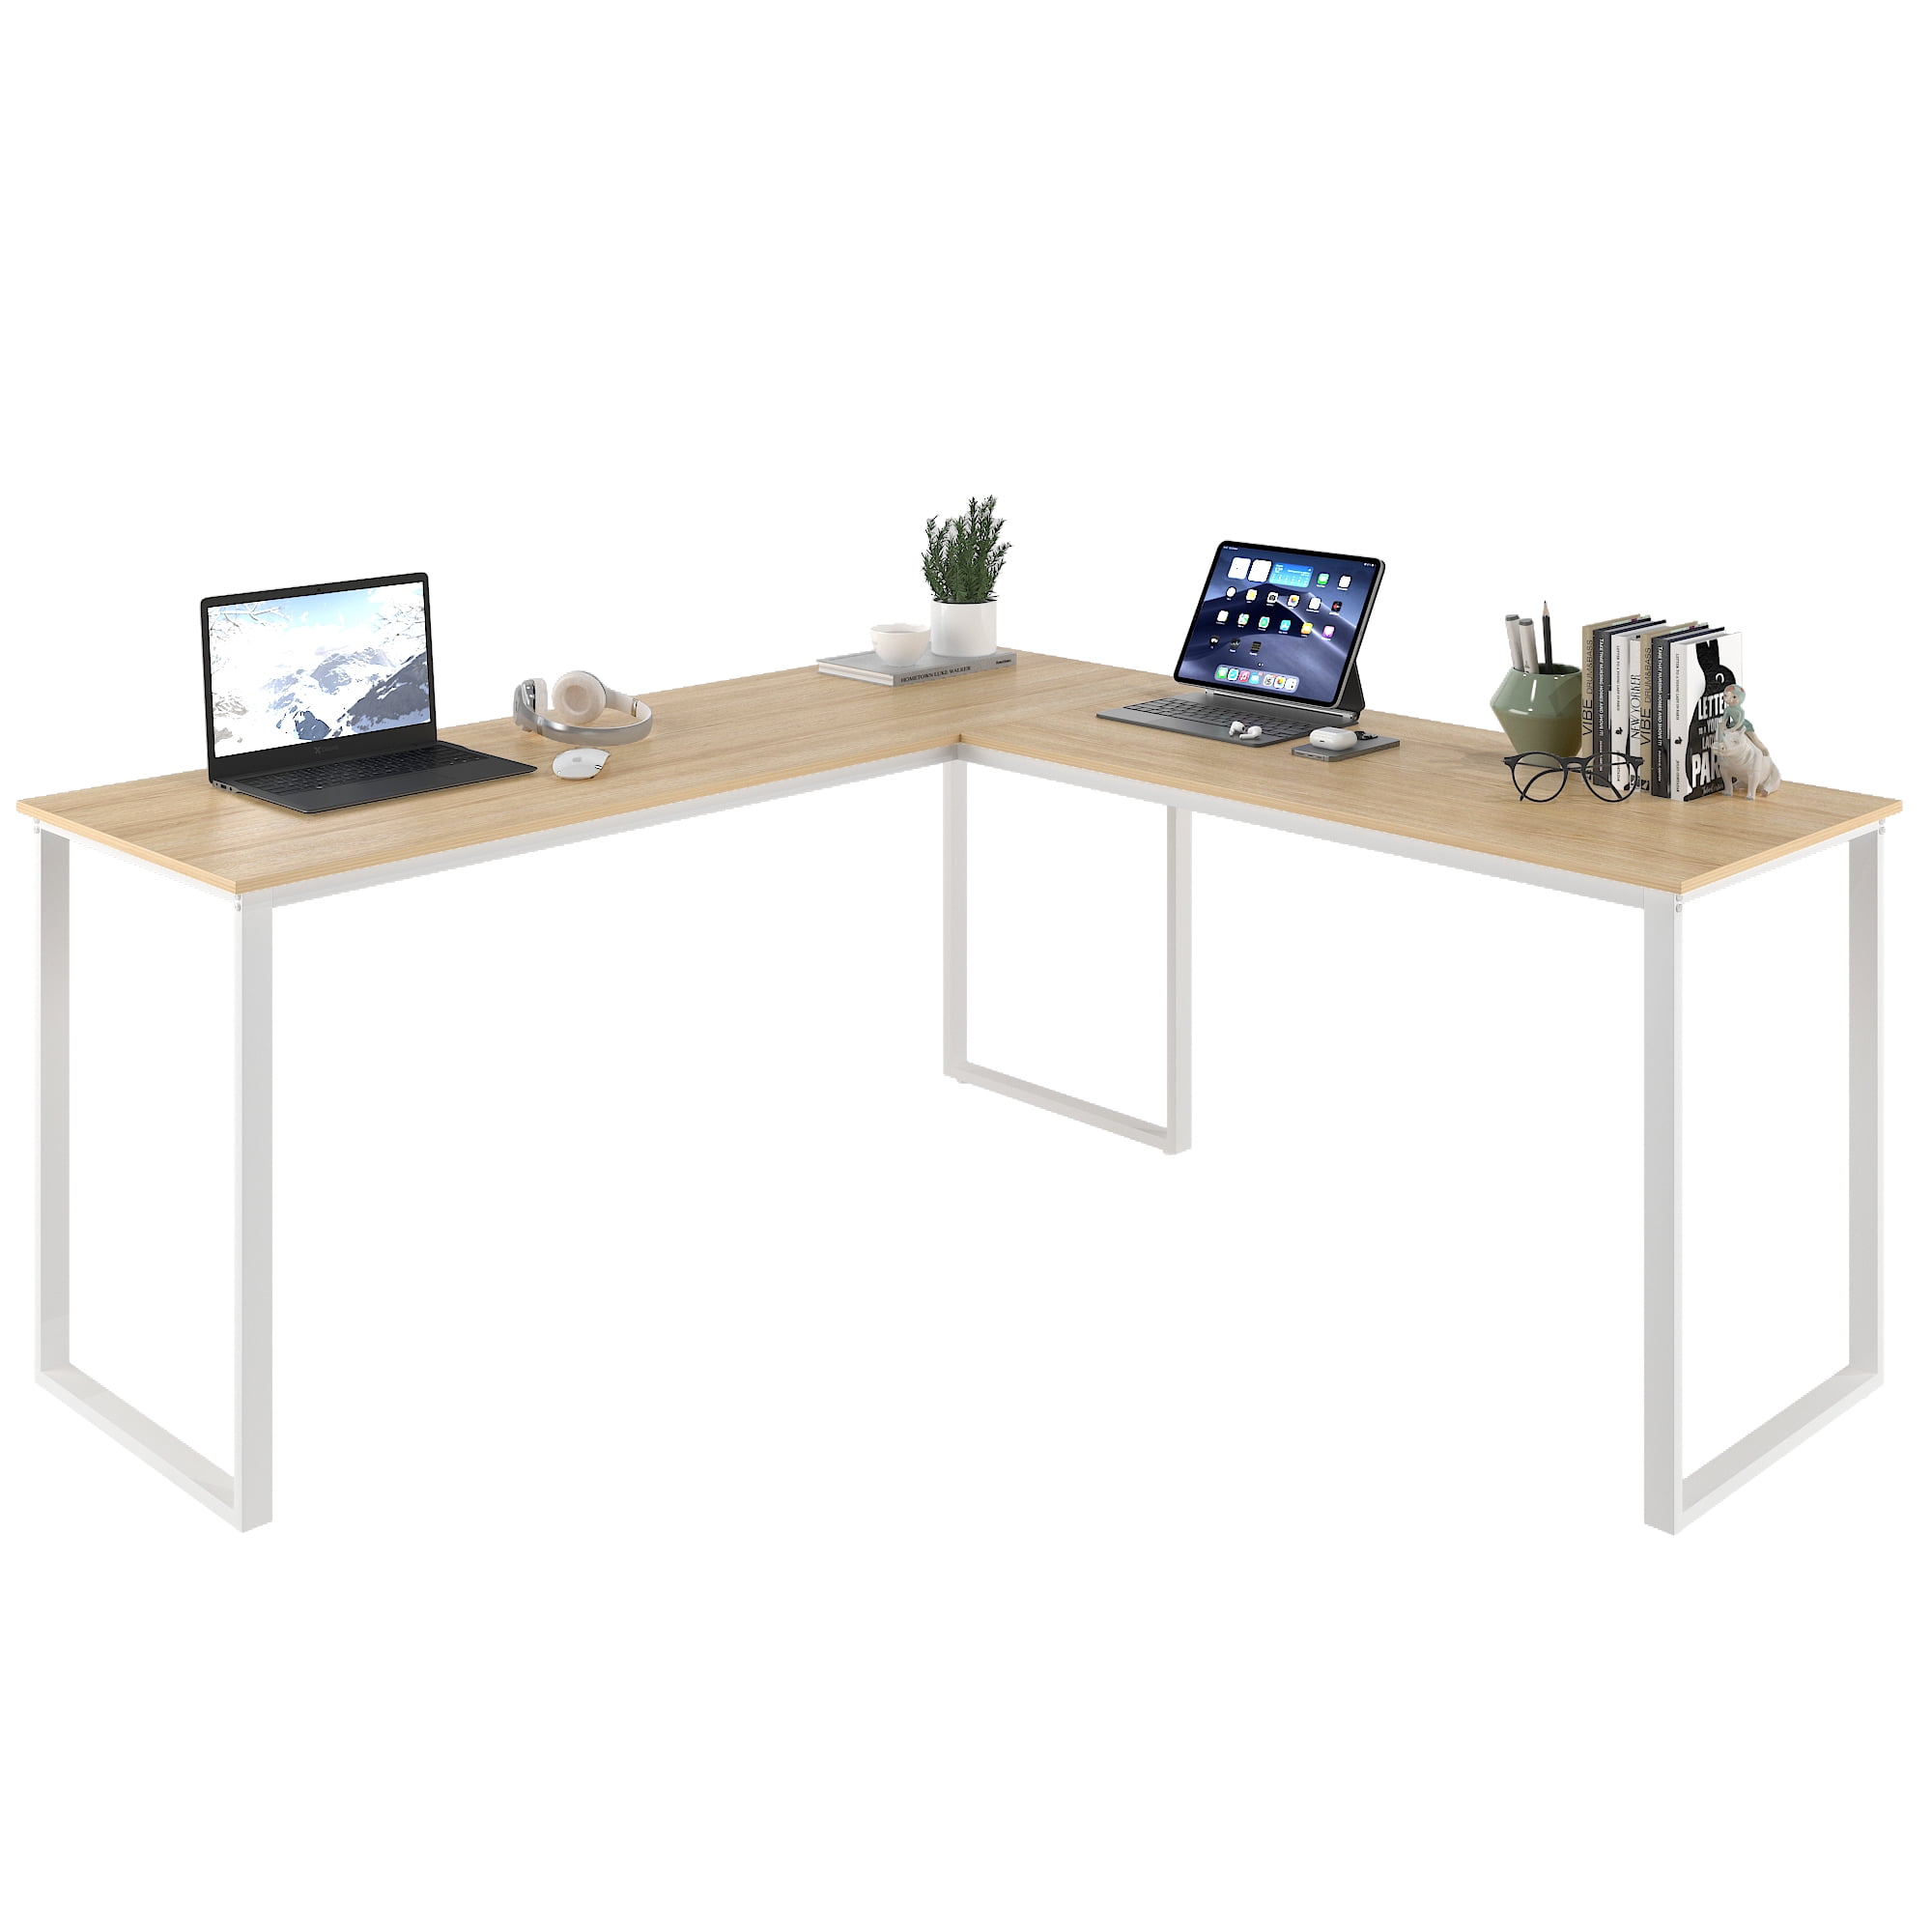 Foxemart L Shaped Desk Corner Desk 58 Computer Gaming Desk PC Table  Writing Workstation for Home Office, Large L Study Desk 2 Person  Multi-Usage